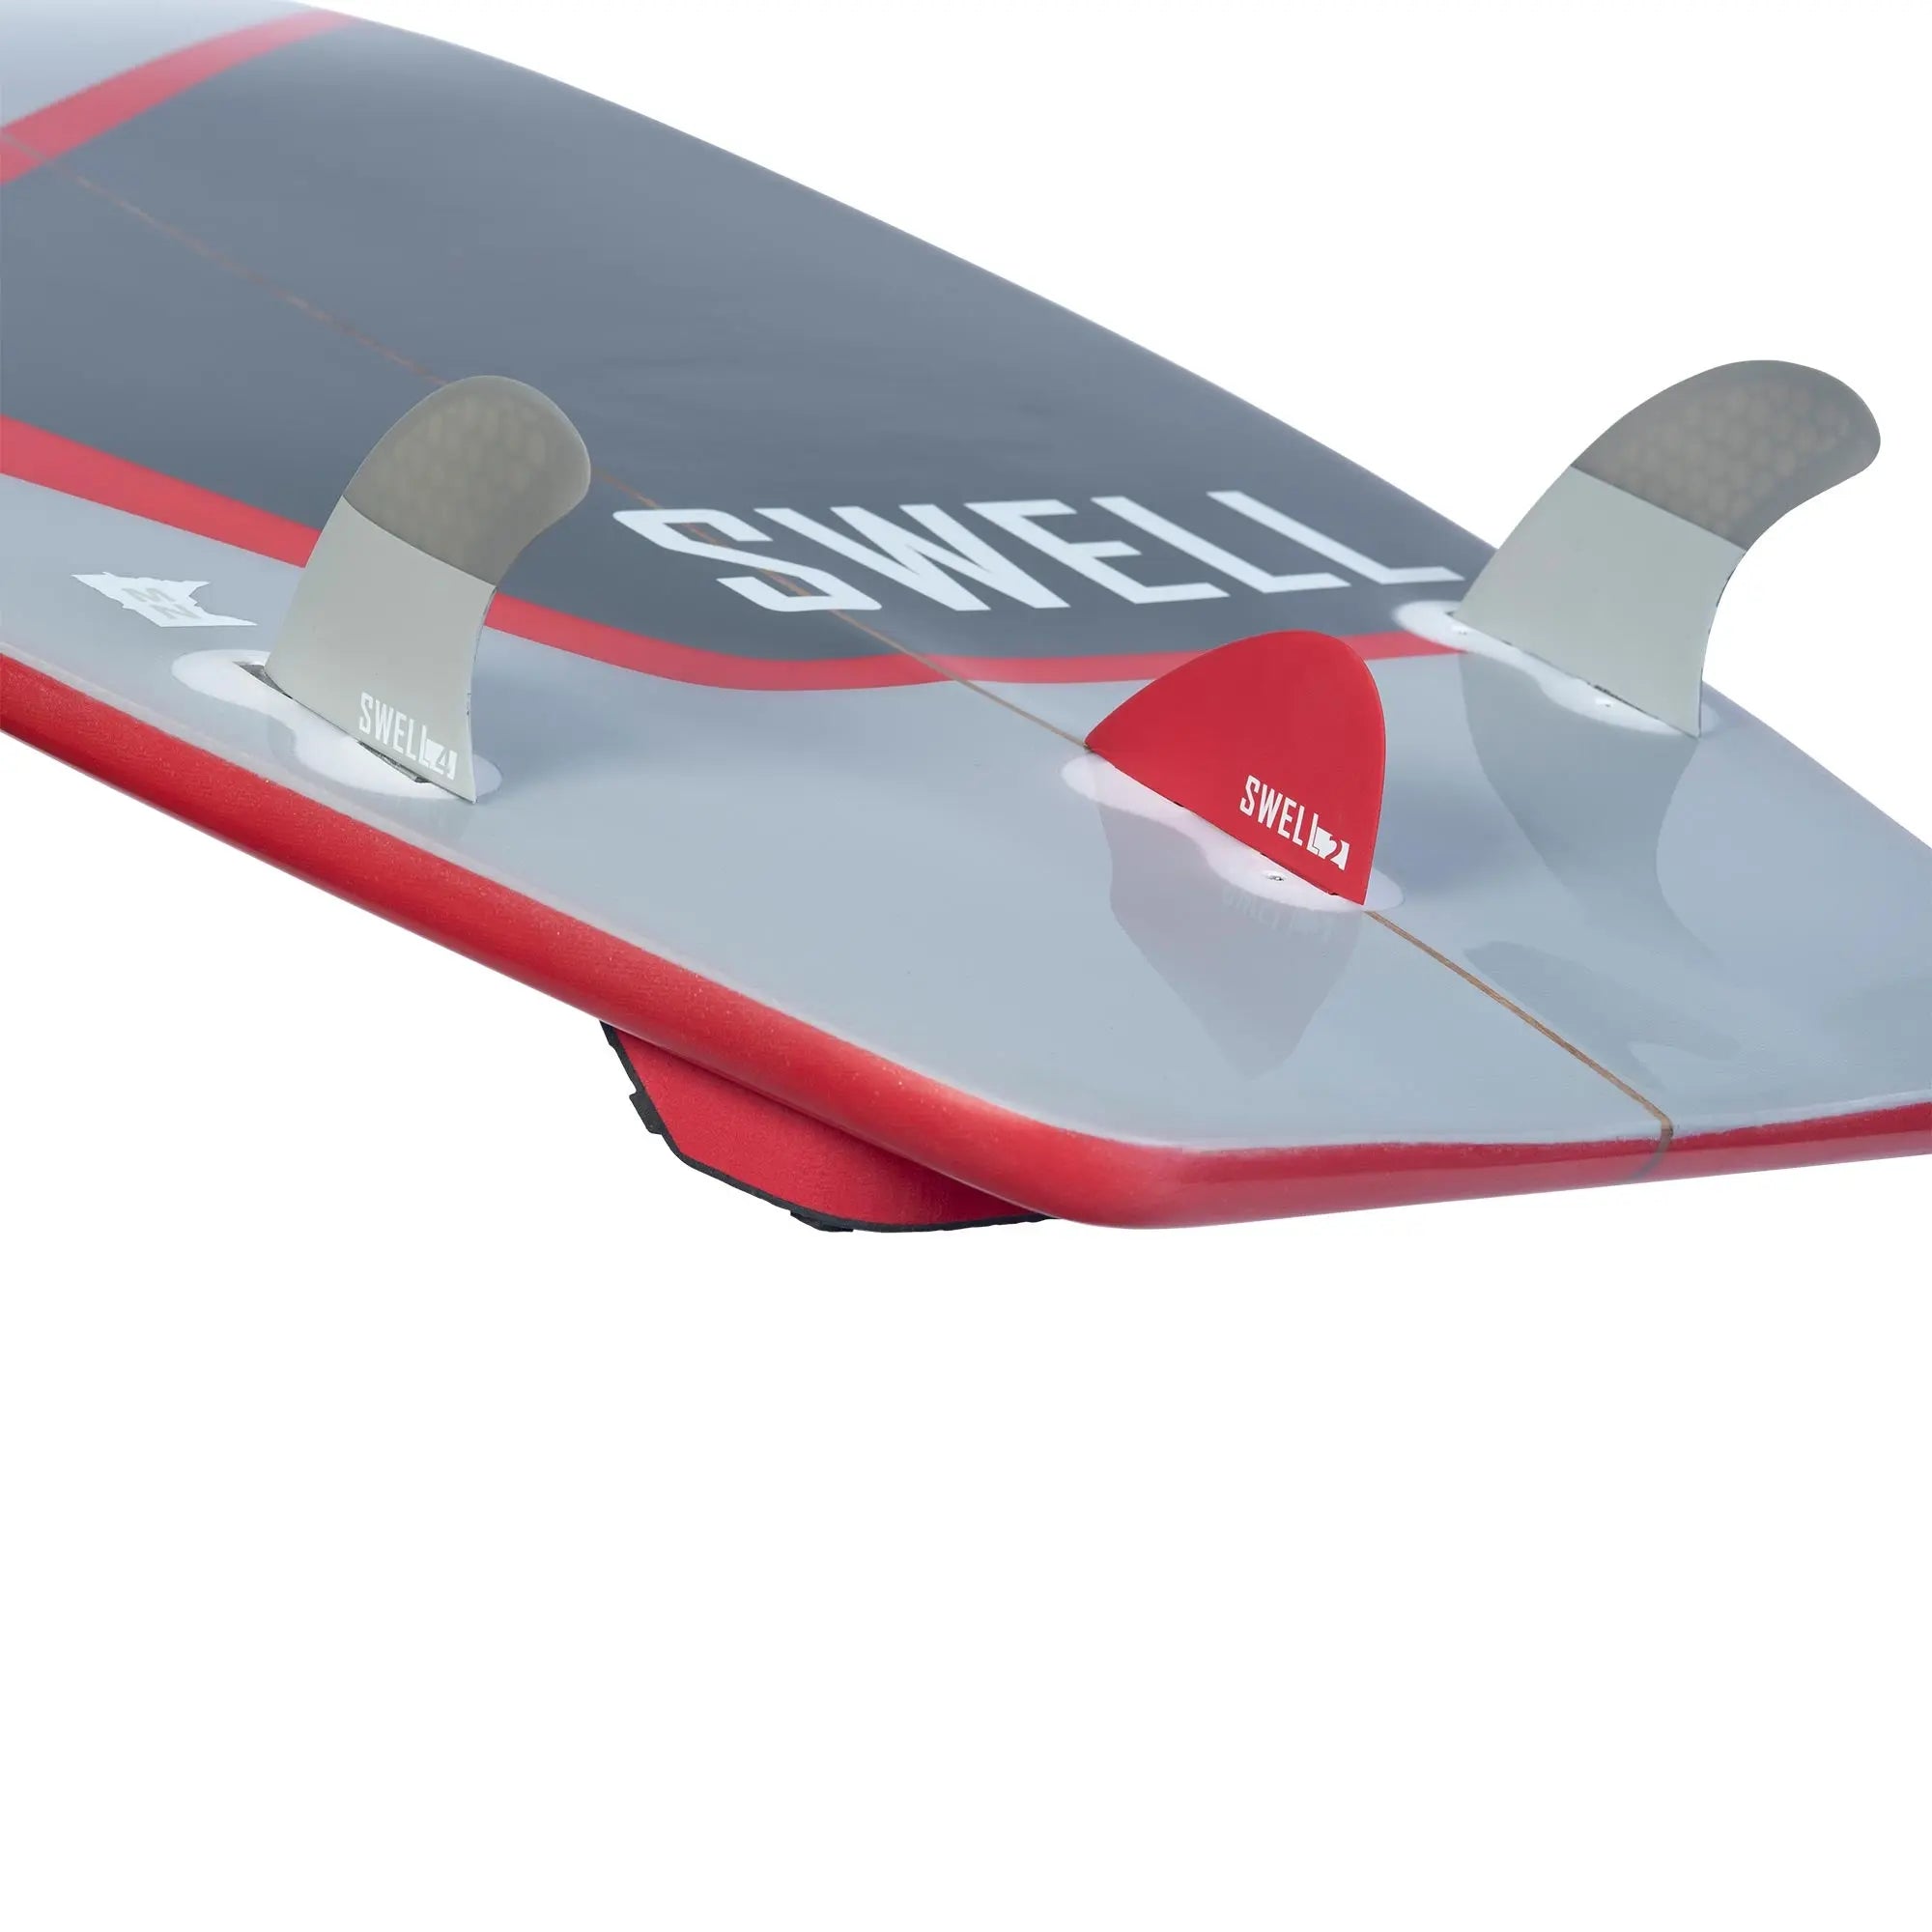 SWELL Wakesurf Razor - Grom Quad Surf Board 45" - Perfect for Kids SWELL Wakesurf